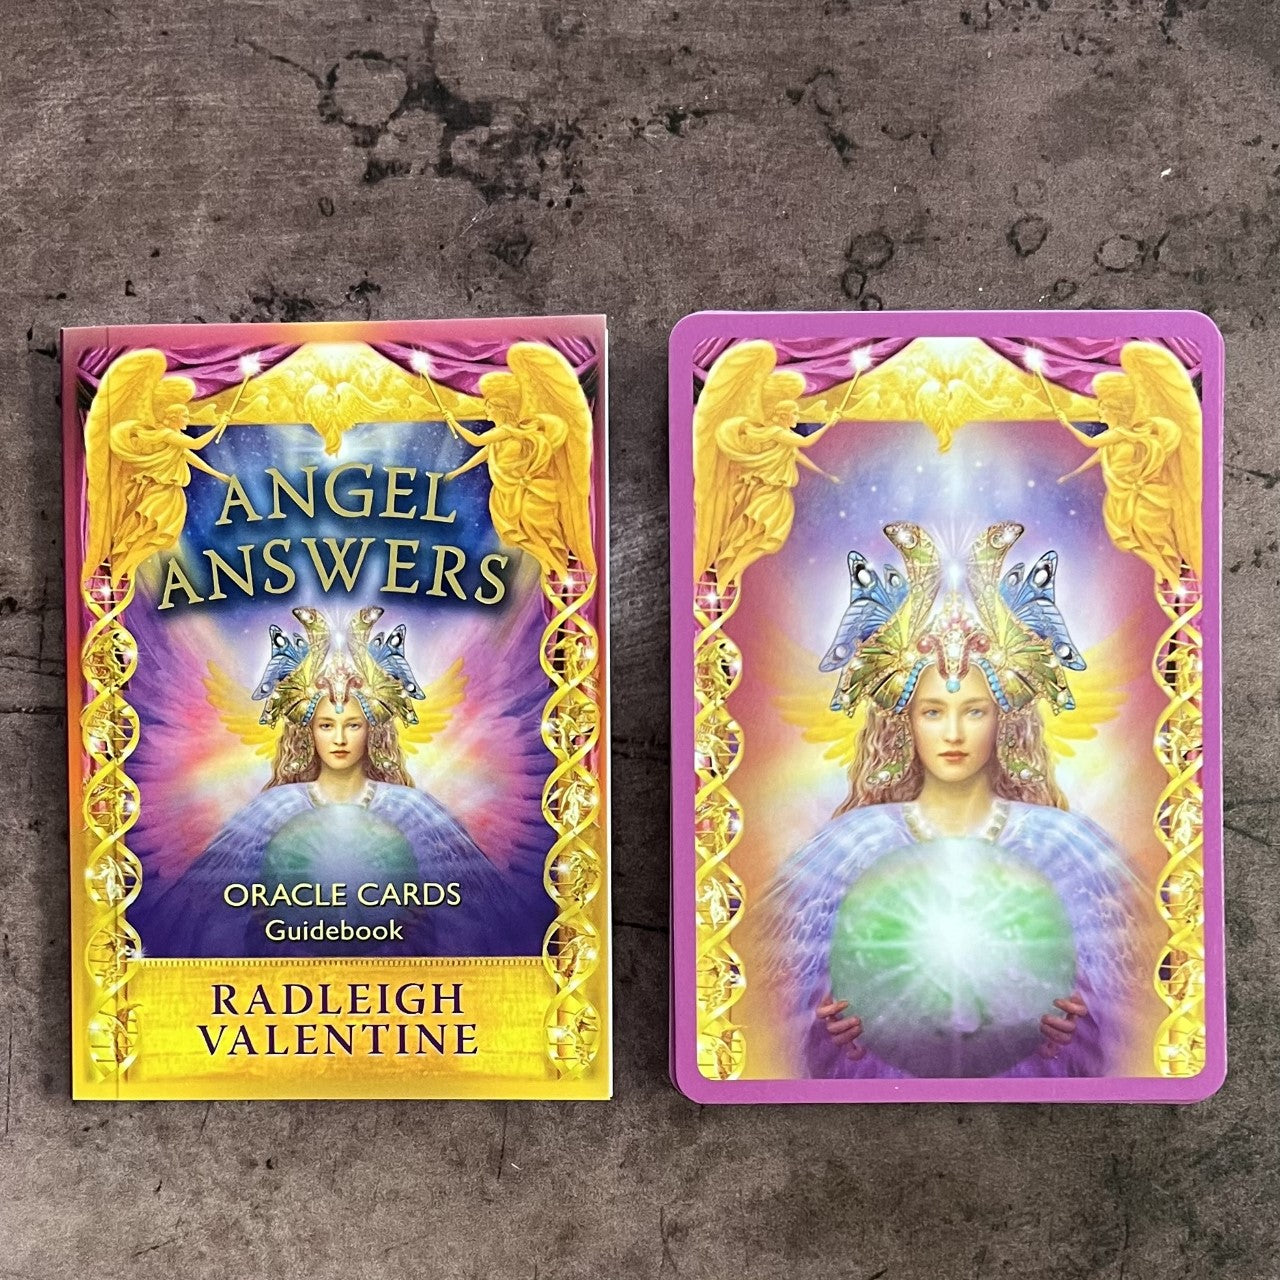 Angel Answers by Radleigh Valentine